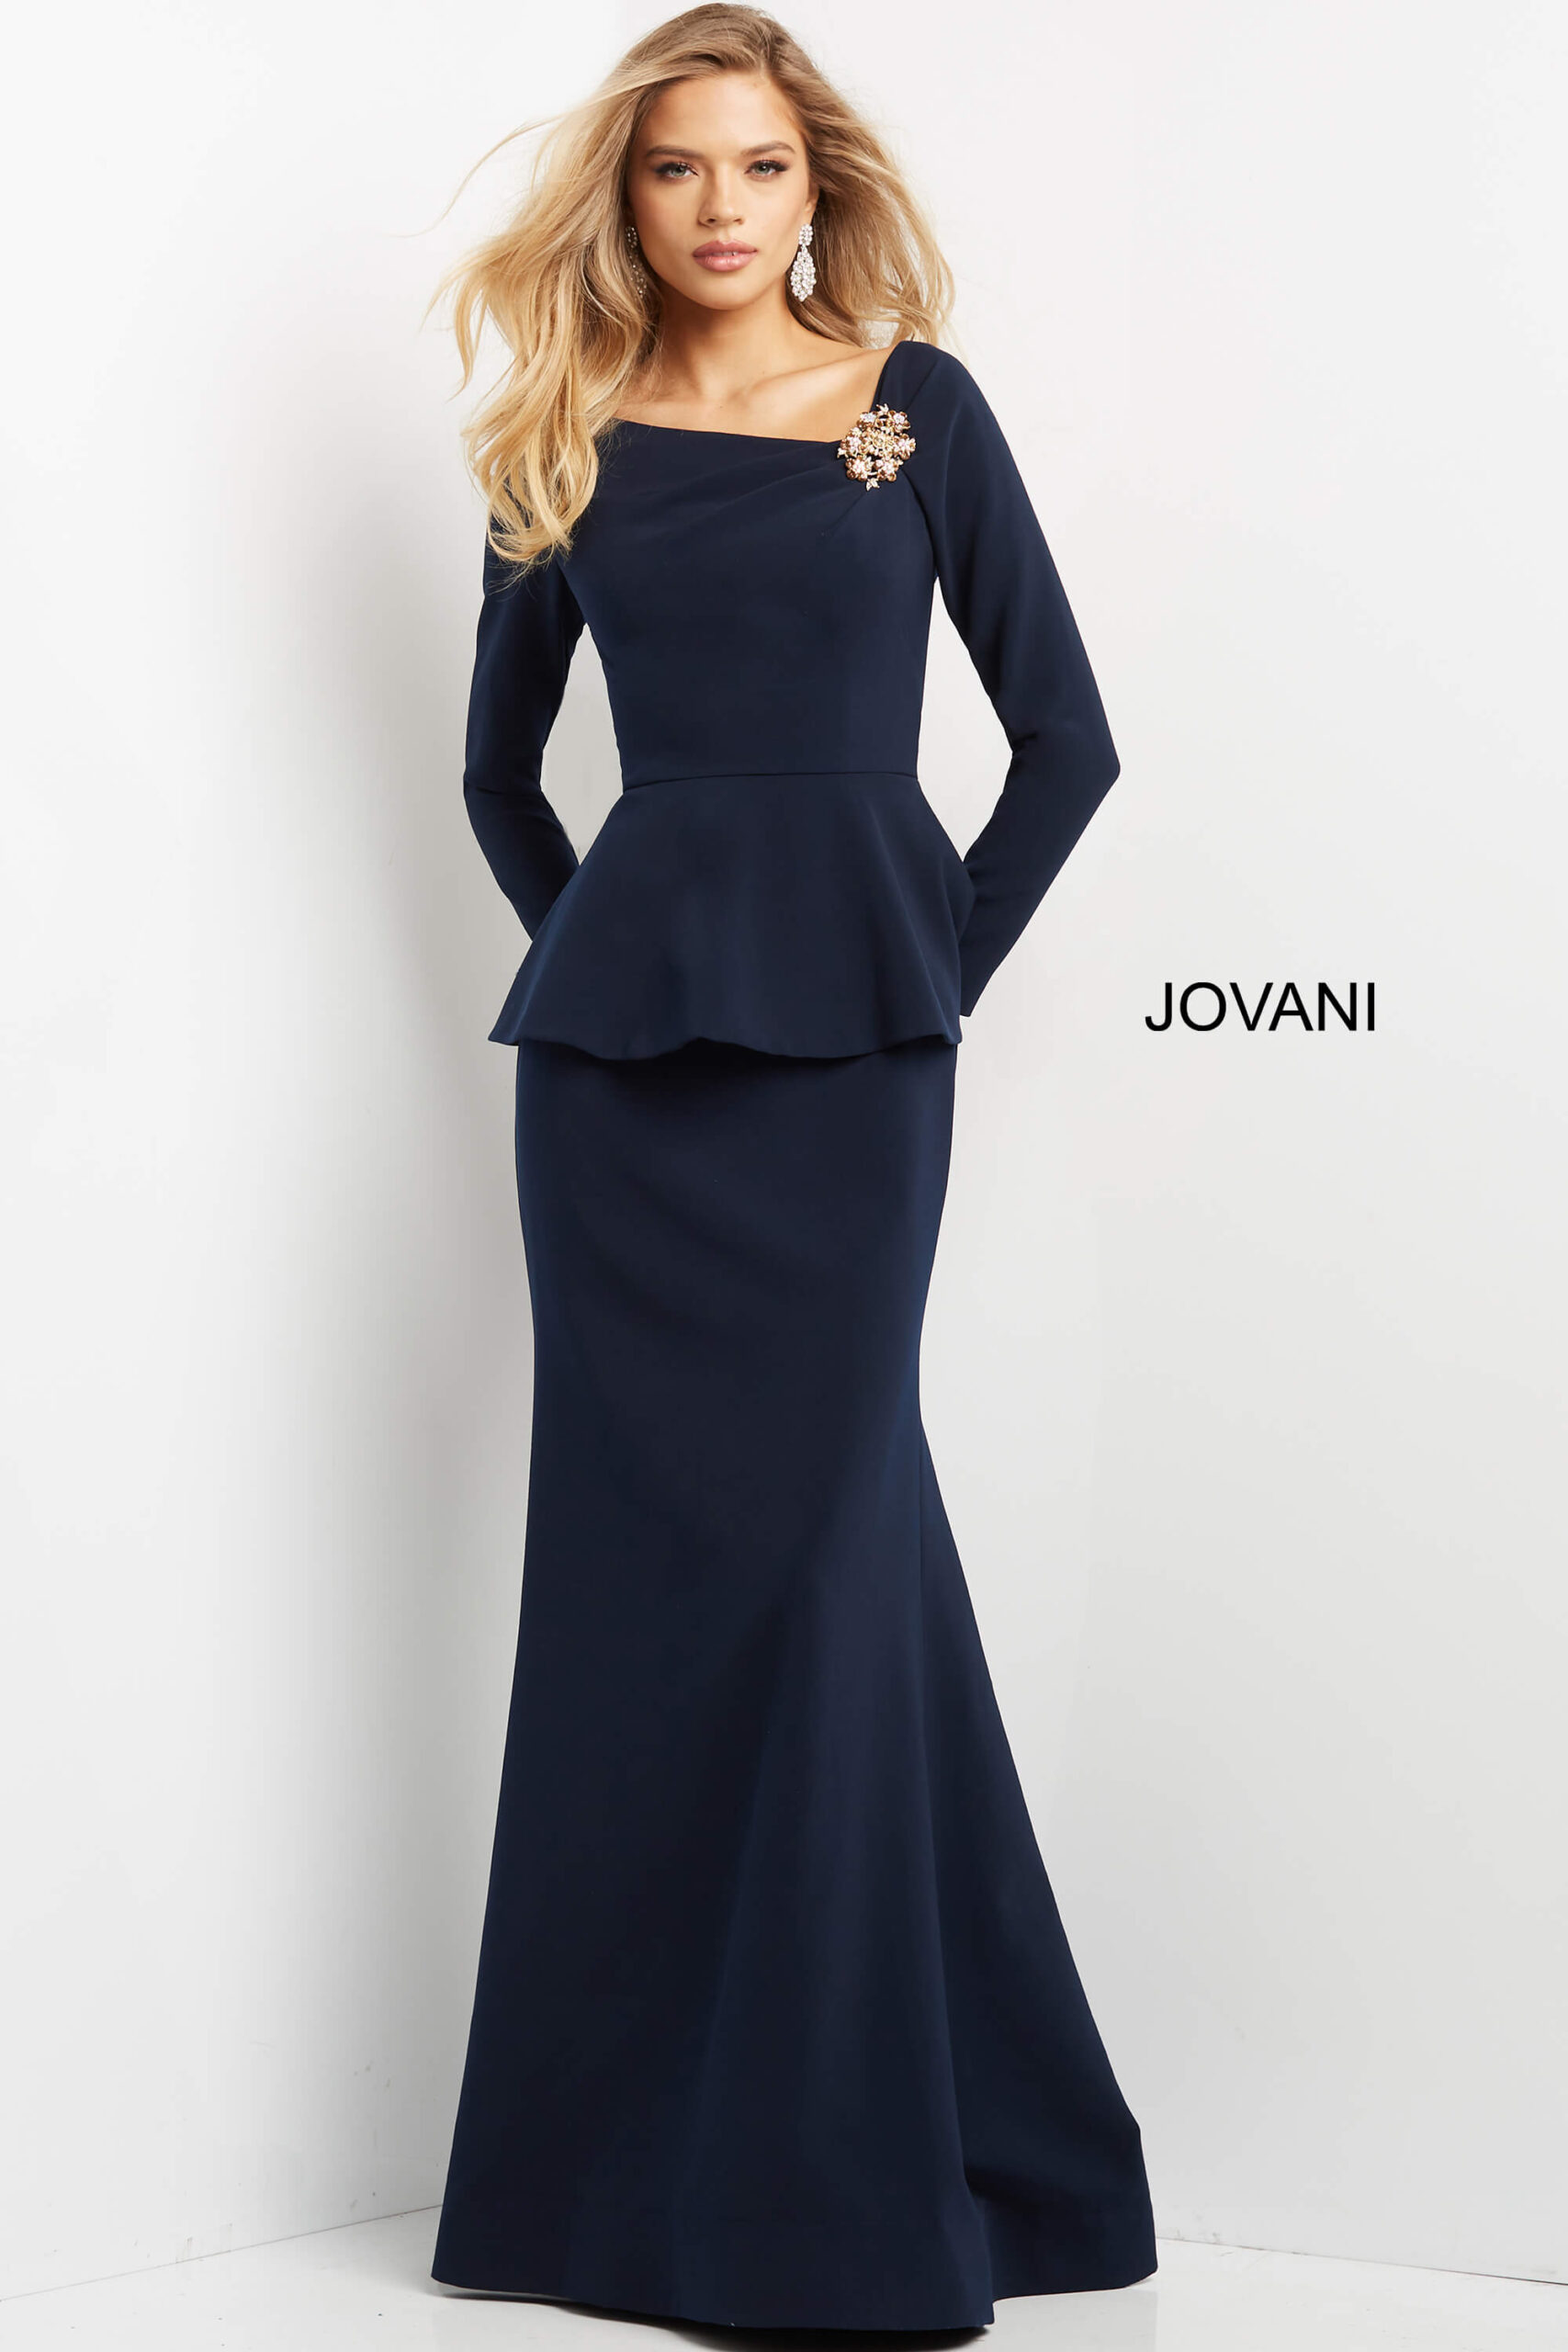 Jovani 07131 Navy Long Sleeve Peplum Dress